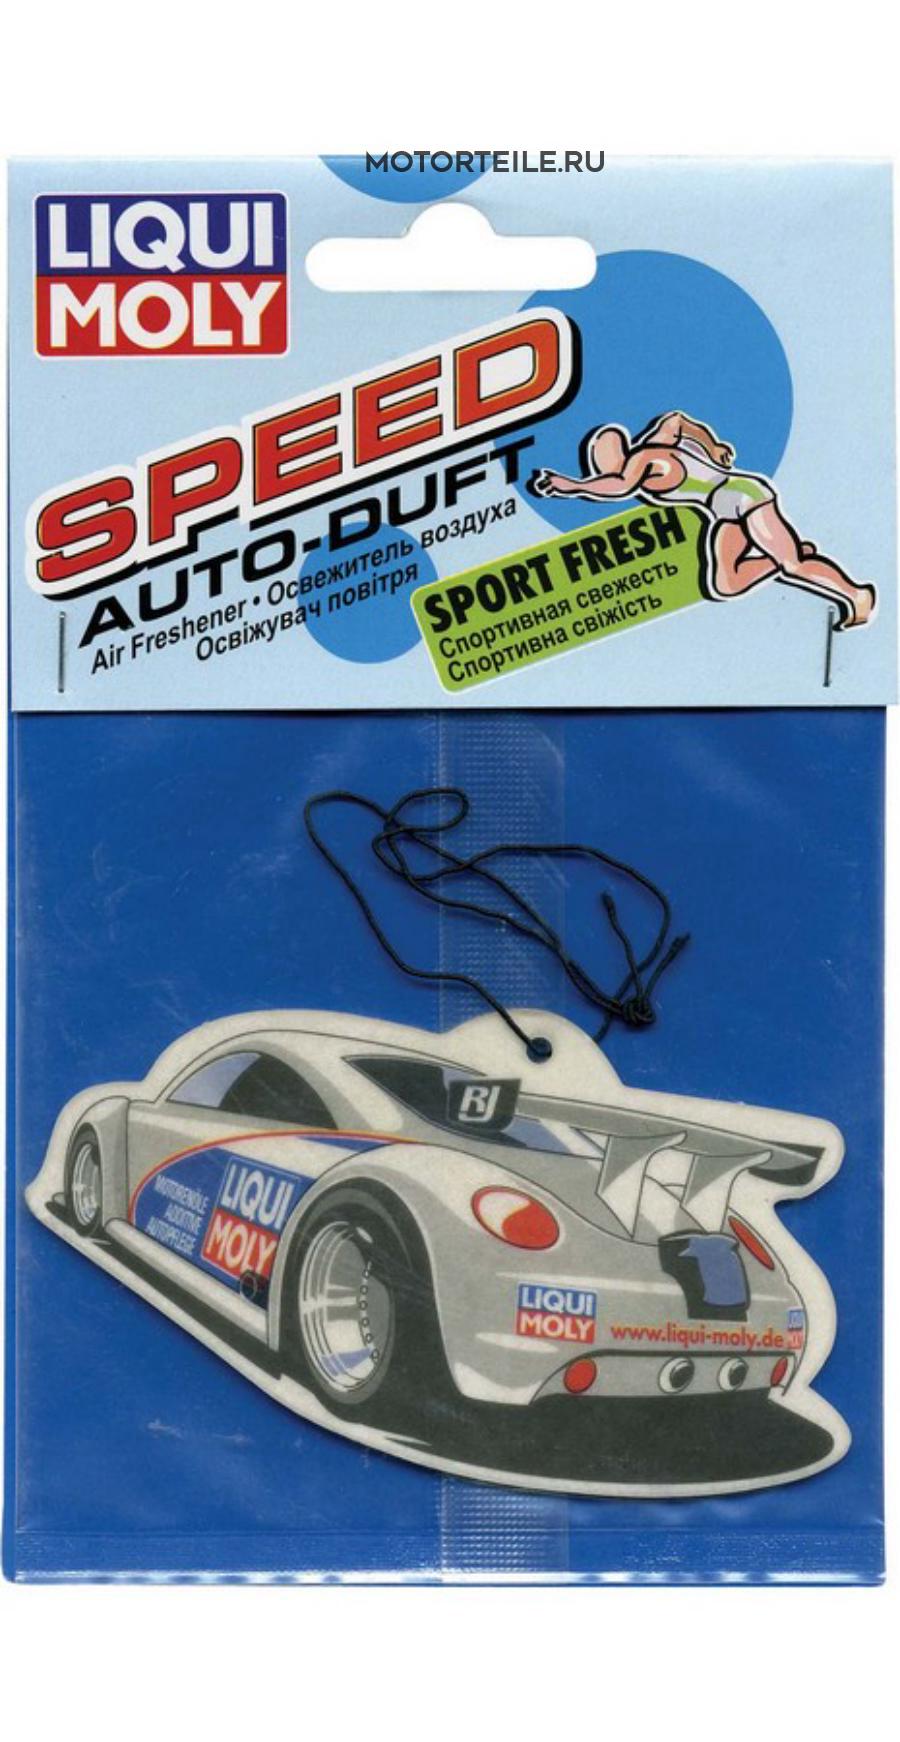 1664 LiquiMoly Освеж.воздуха (спорт.свежесть) Auto-Duft  Speed (SportFresh) (1шт)